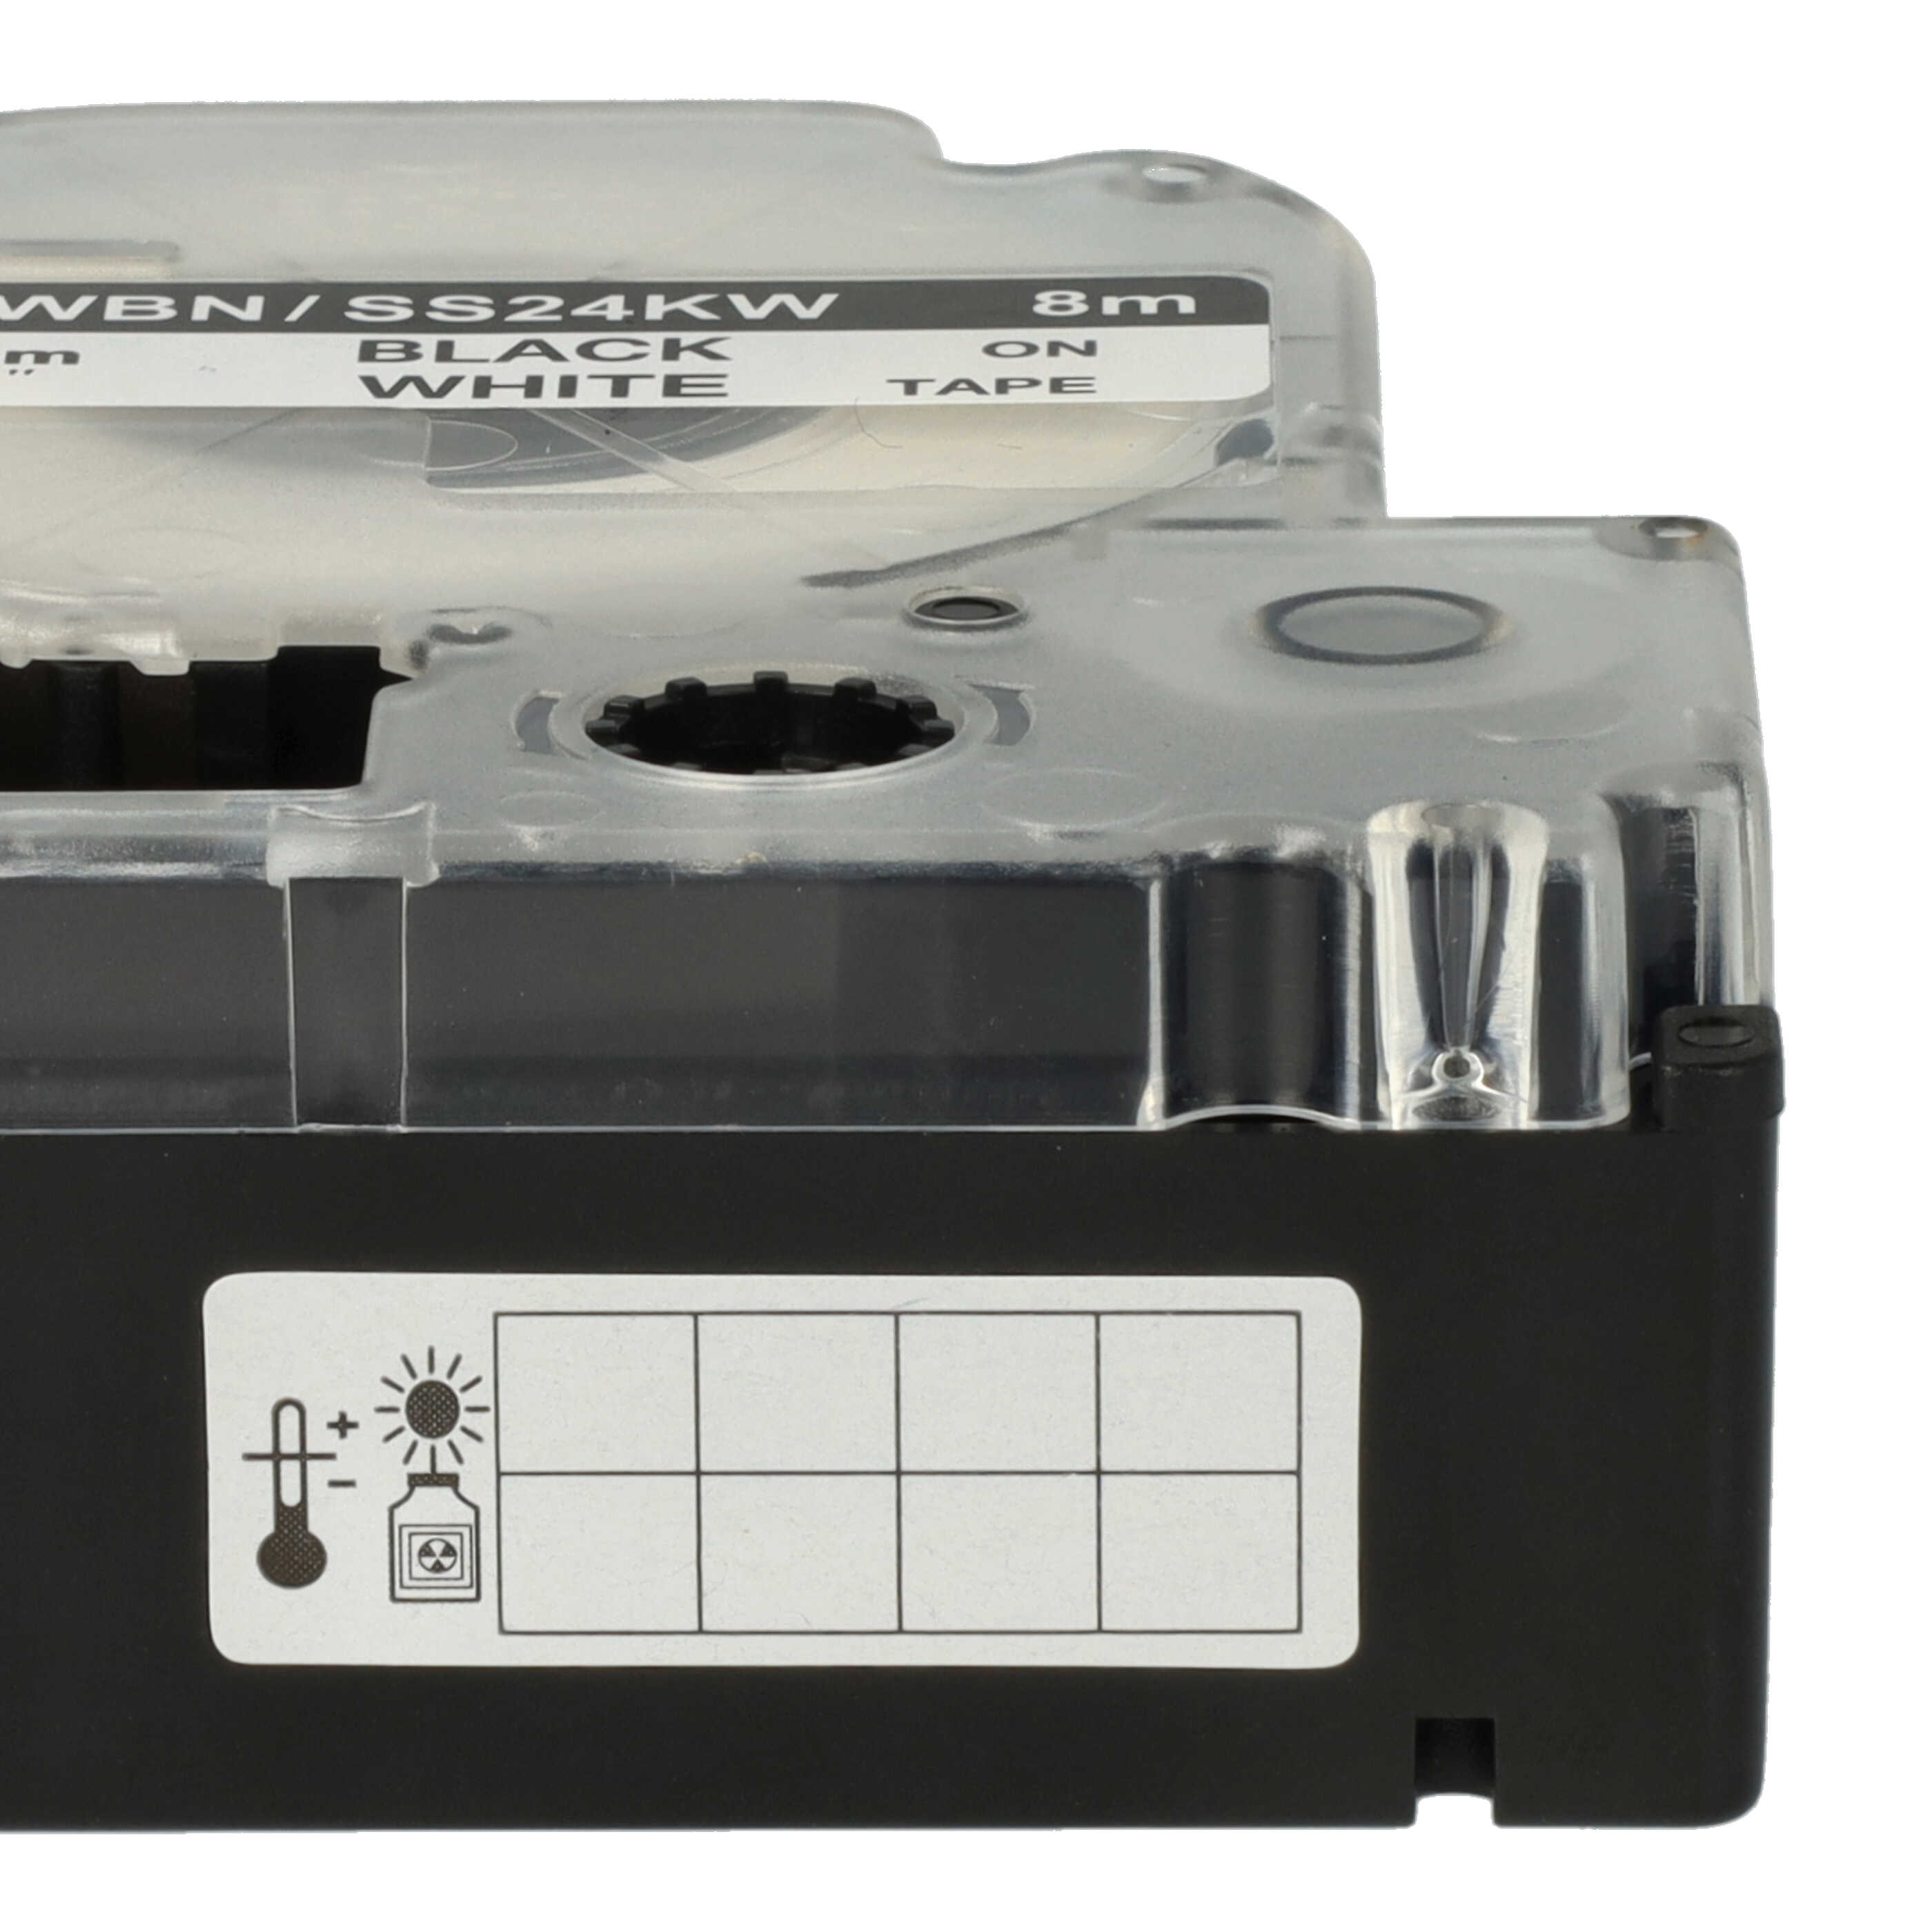 5x Casete cinta escritura reemplaza Epson LC-6WBN Negro su Blanco